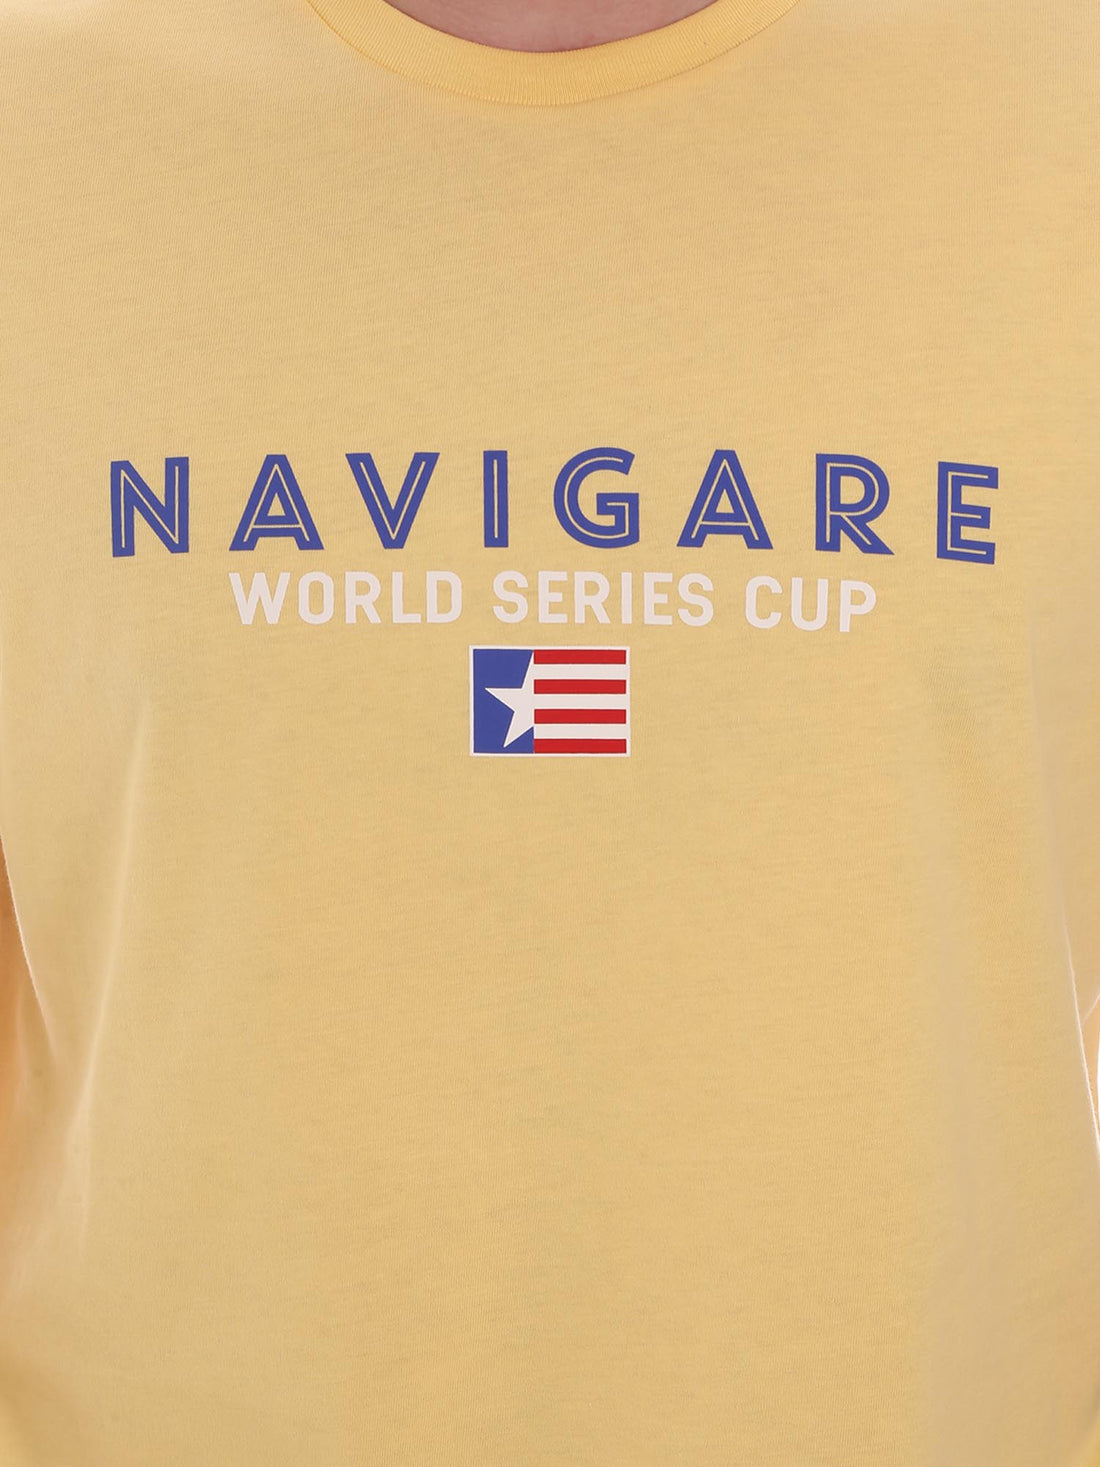 T-shirt Giallo Navigare